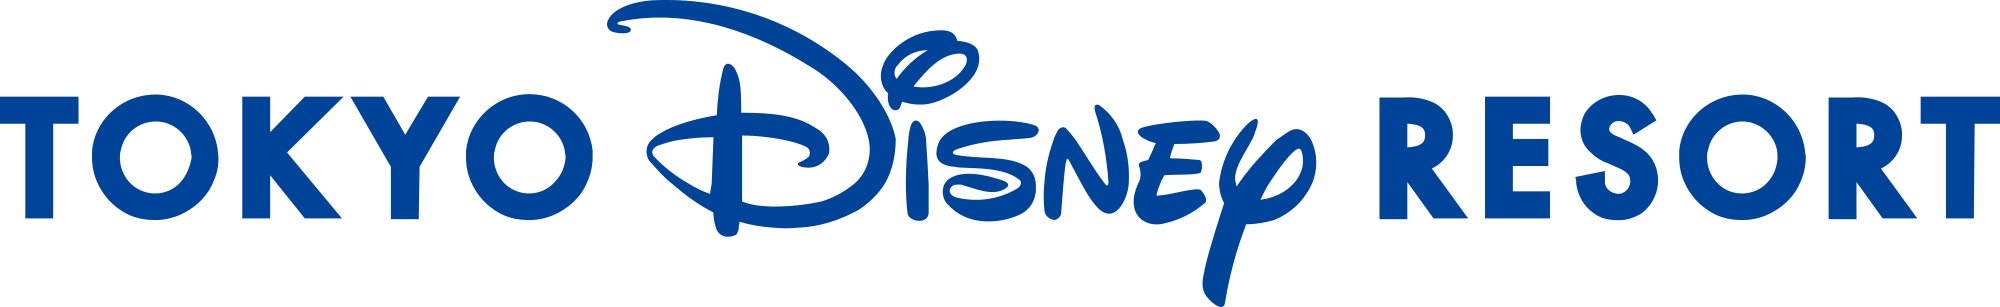 Disney Resort Logo - File:Tokyo Disney Resort logo.svg - Wikimedia Commons